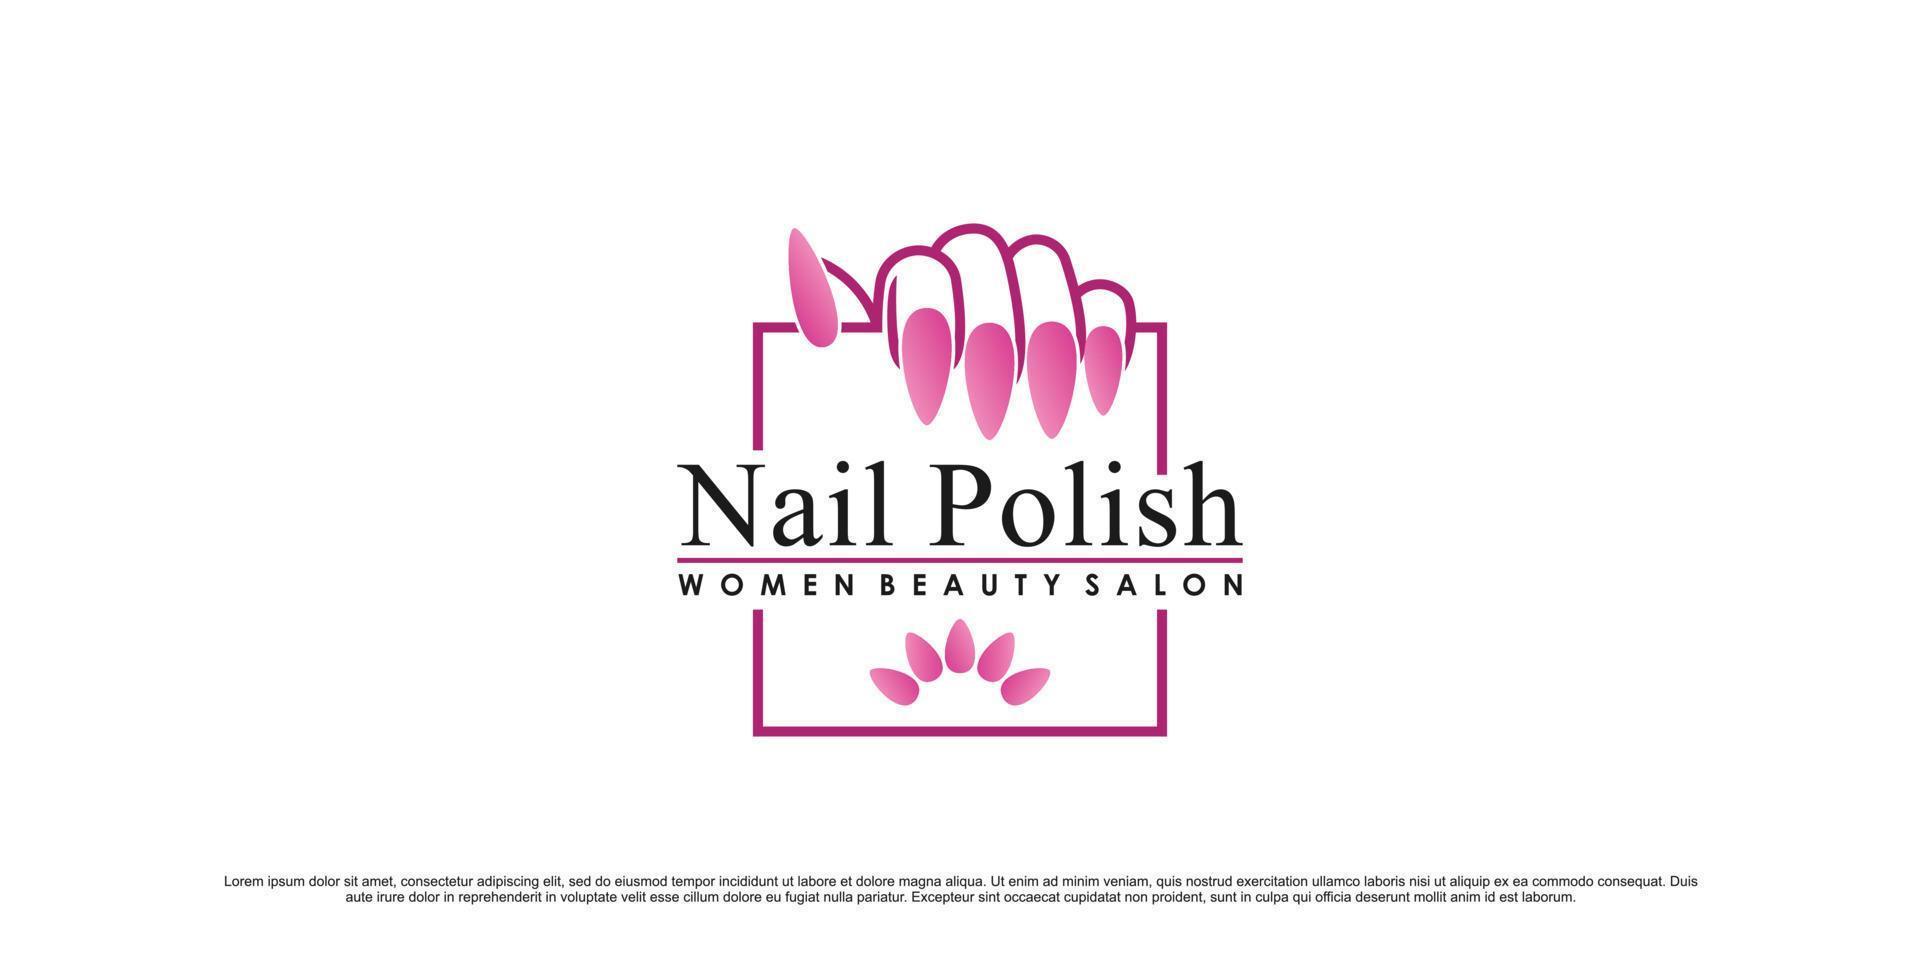 Nail polish logo design inspiration for women beauty salon with modern style concept Premium Vector